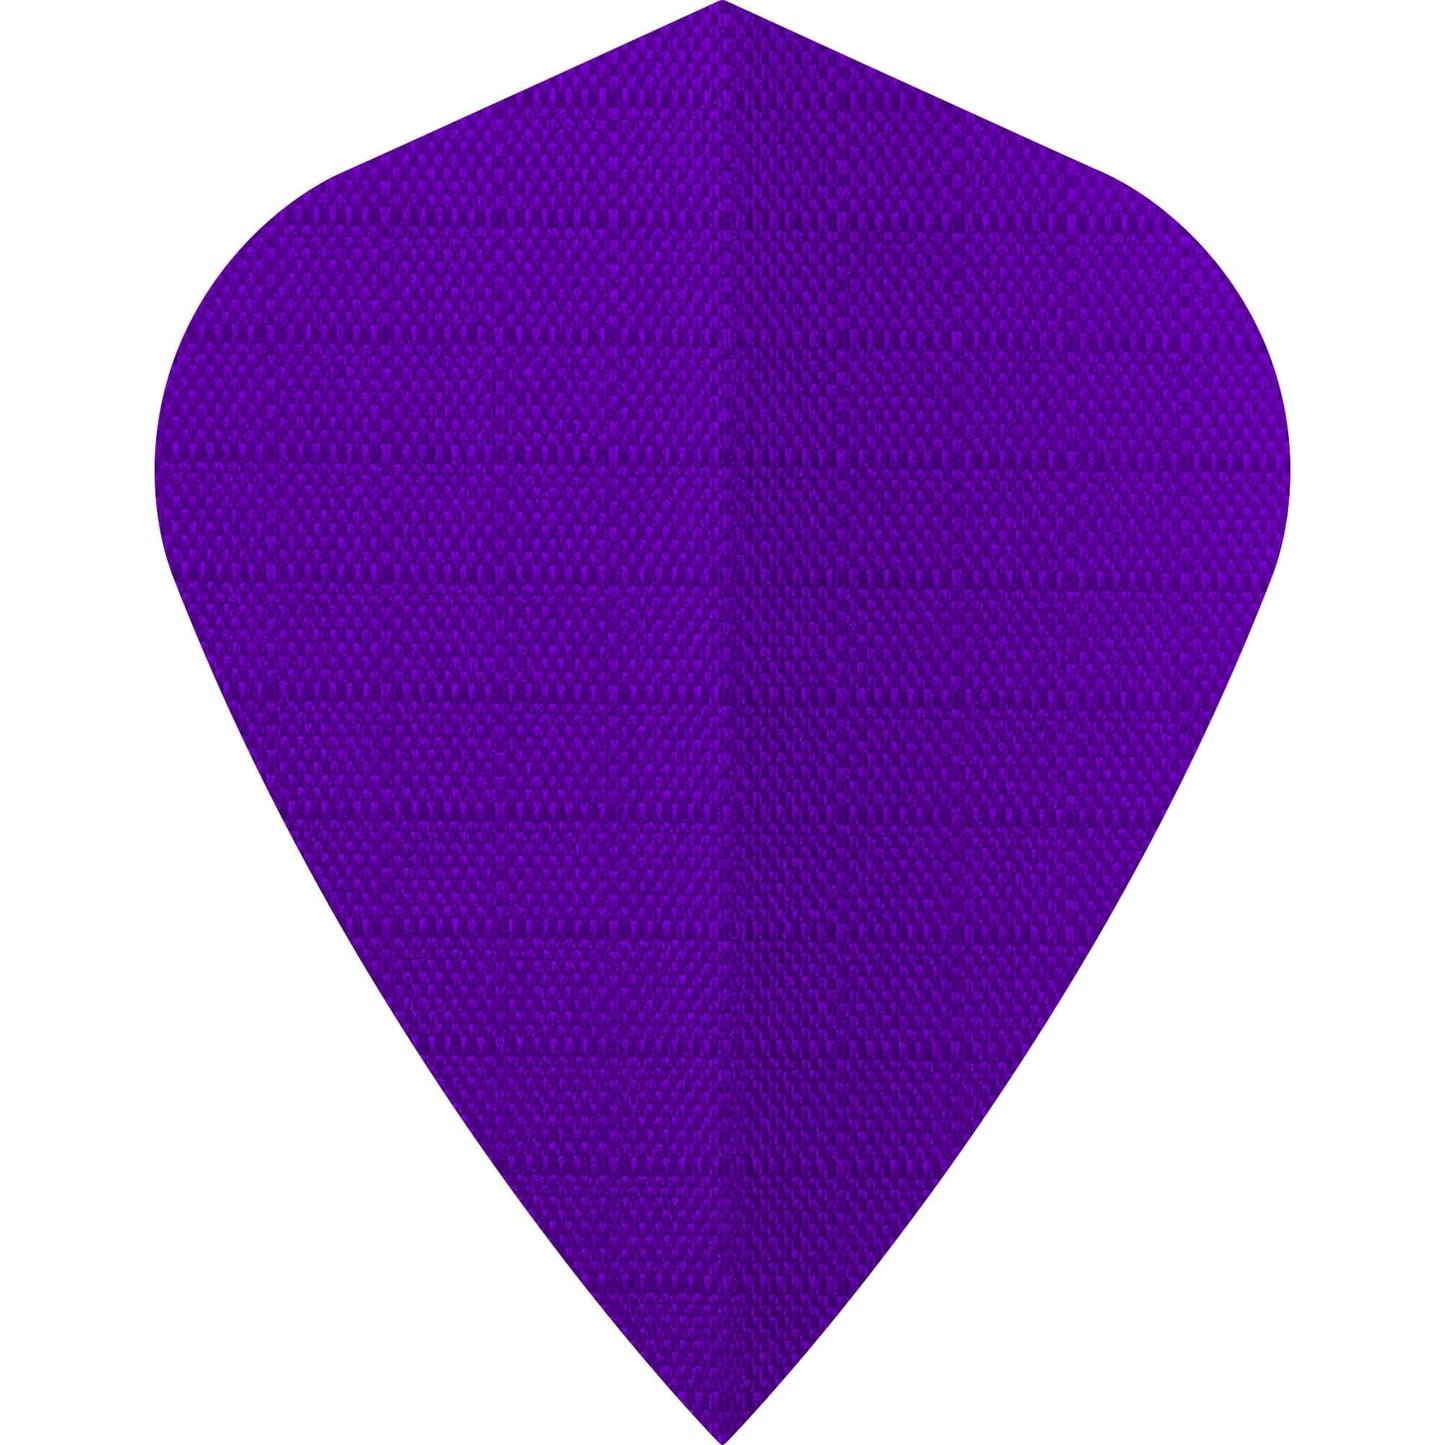 *Designa Dart Flights - Fabric Rip Stop Nylon - Longlife - Kite Purple